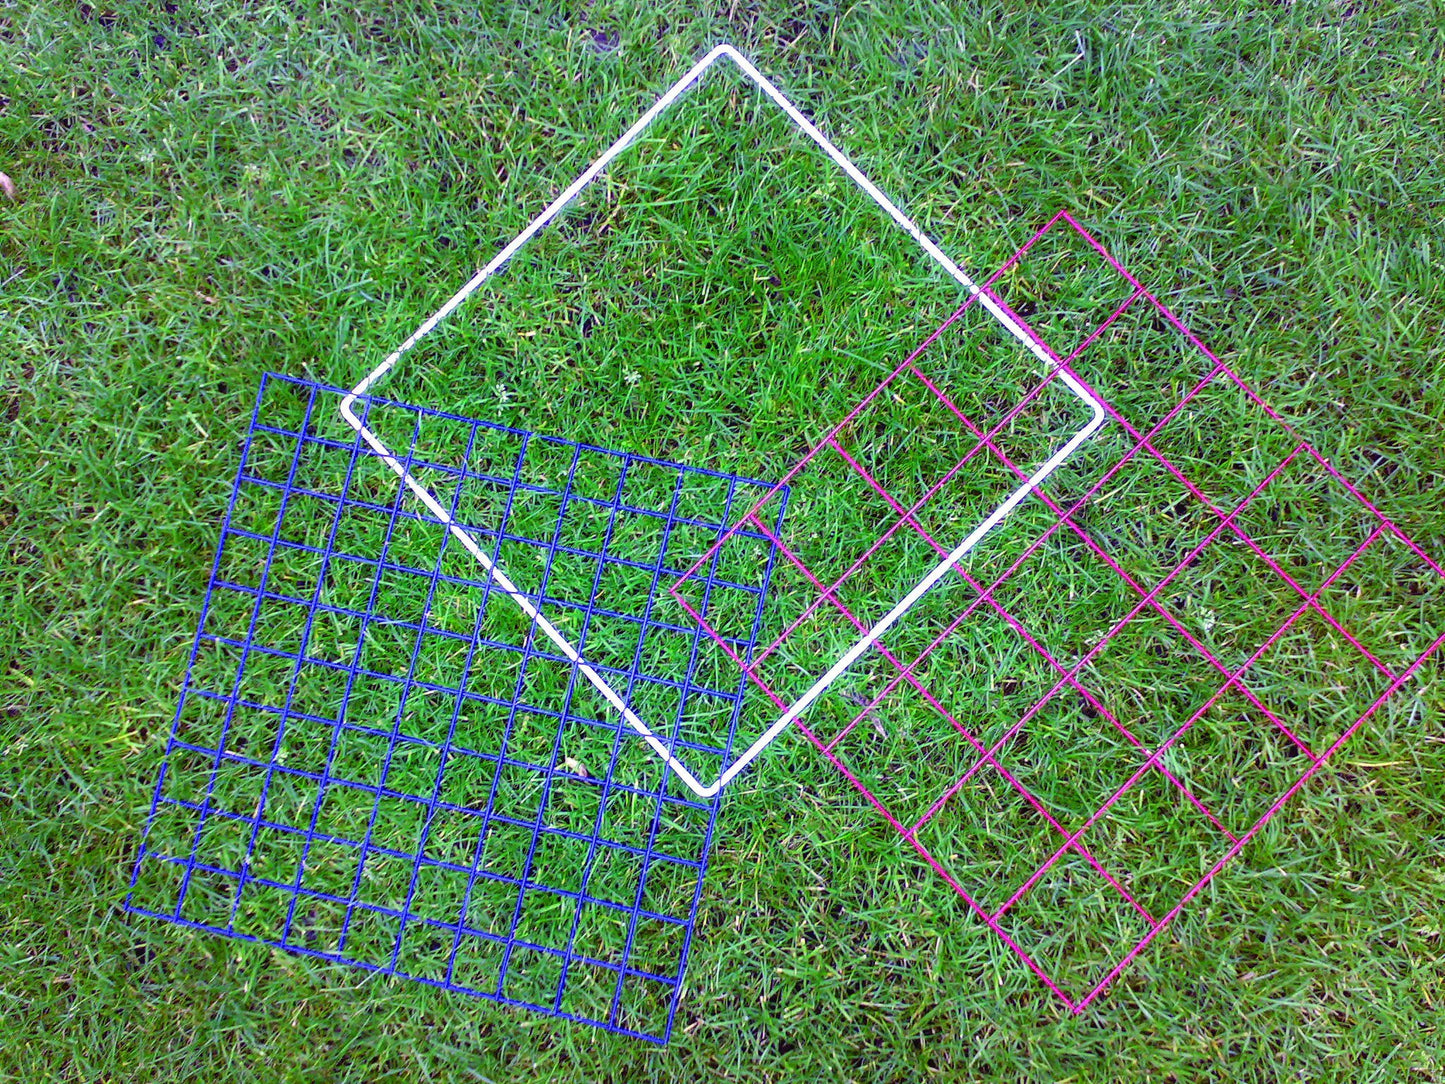 Fieldwork Equipment - Quadrats - For Sampling Plants